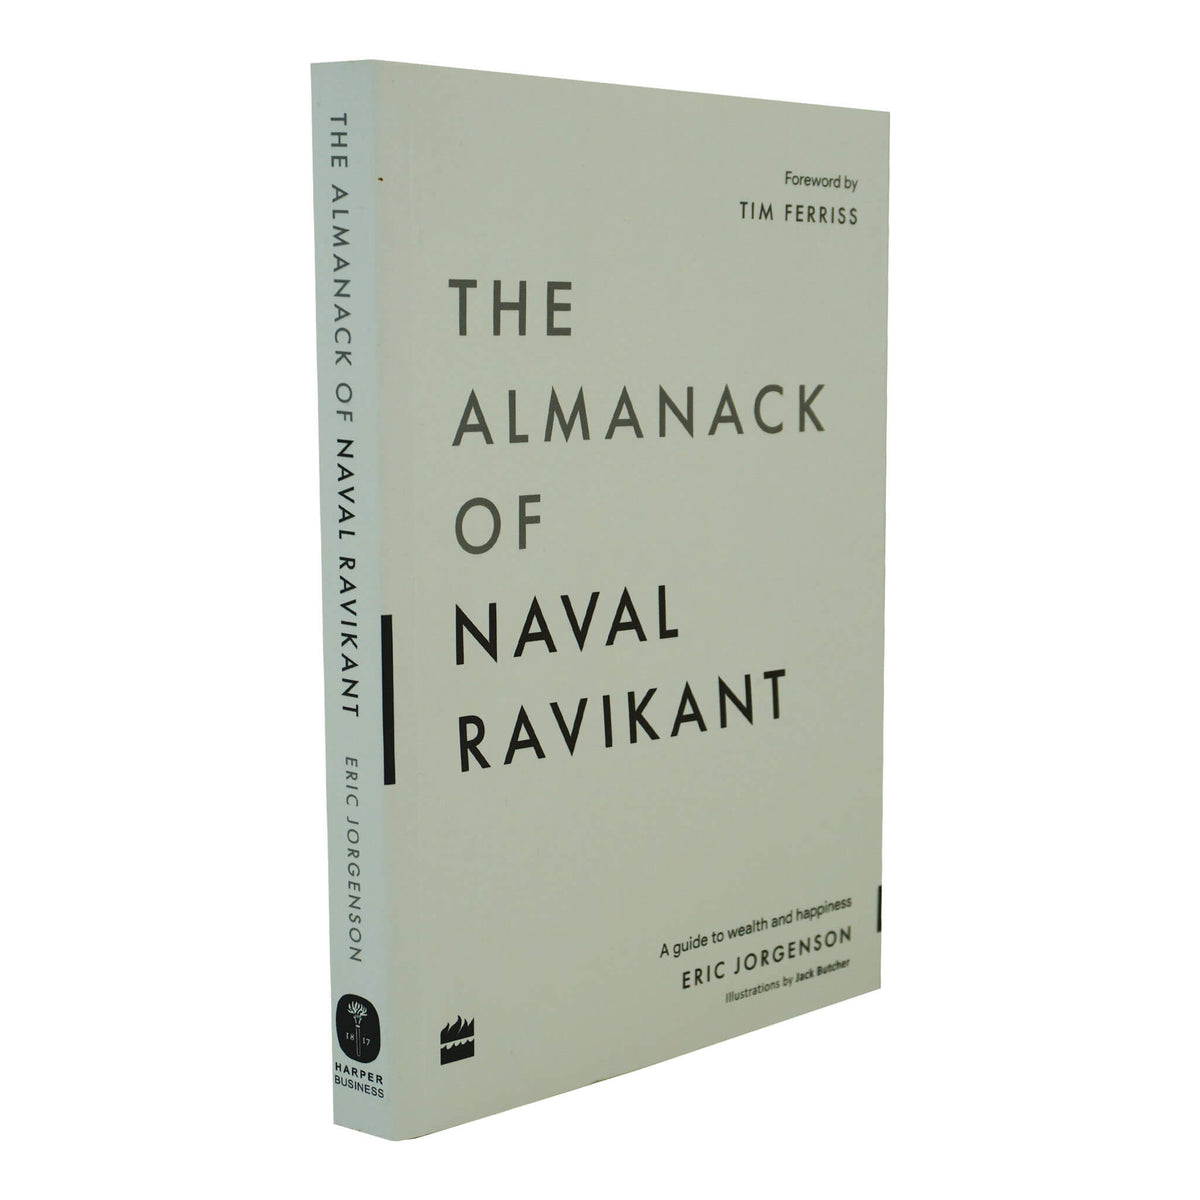 L'Almanacco Di Naval Ravikant - Eric Jorgenson #44